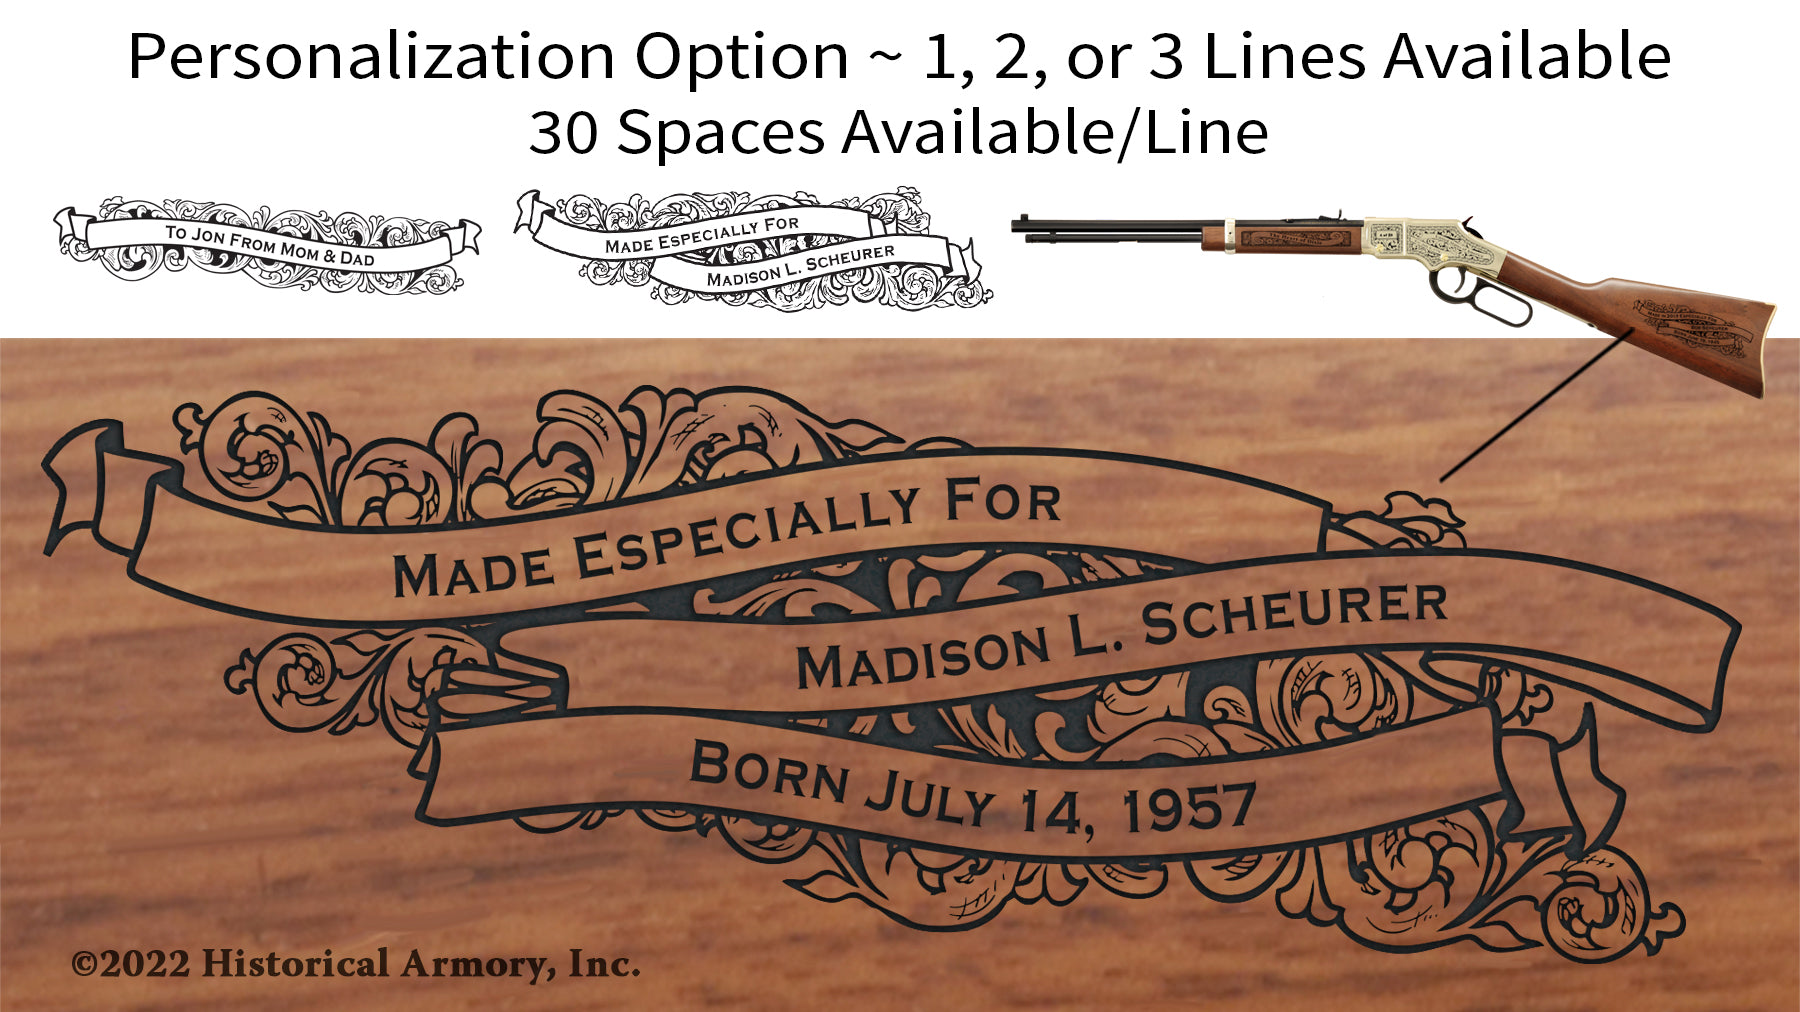 Rosebud County Montana Engraved Rifle Personalization